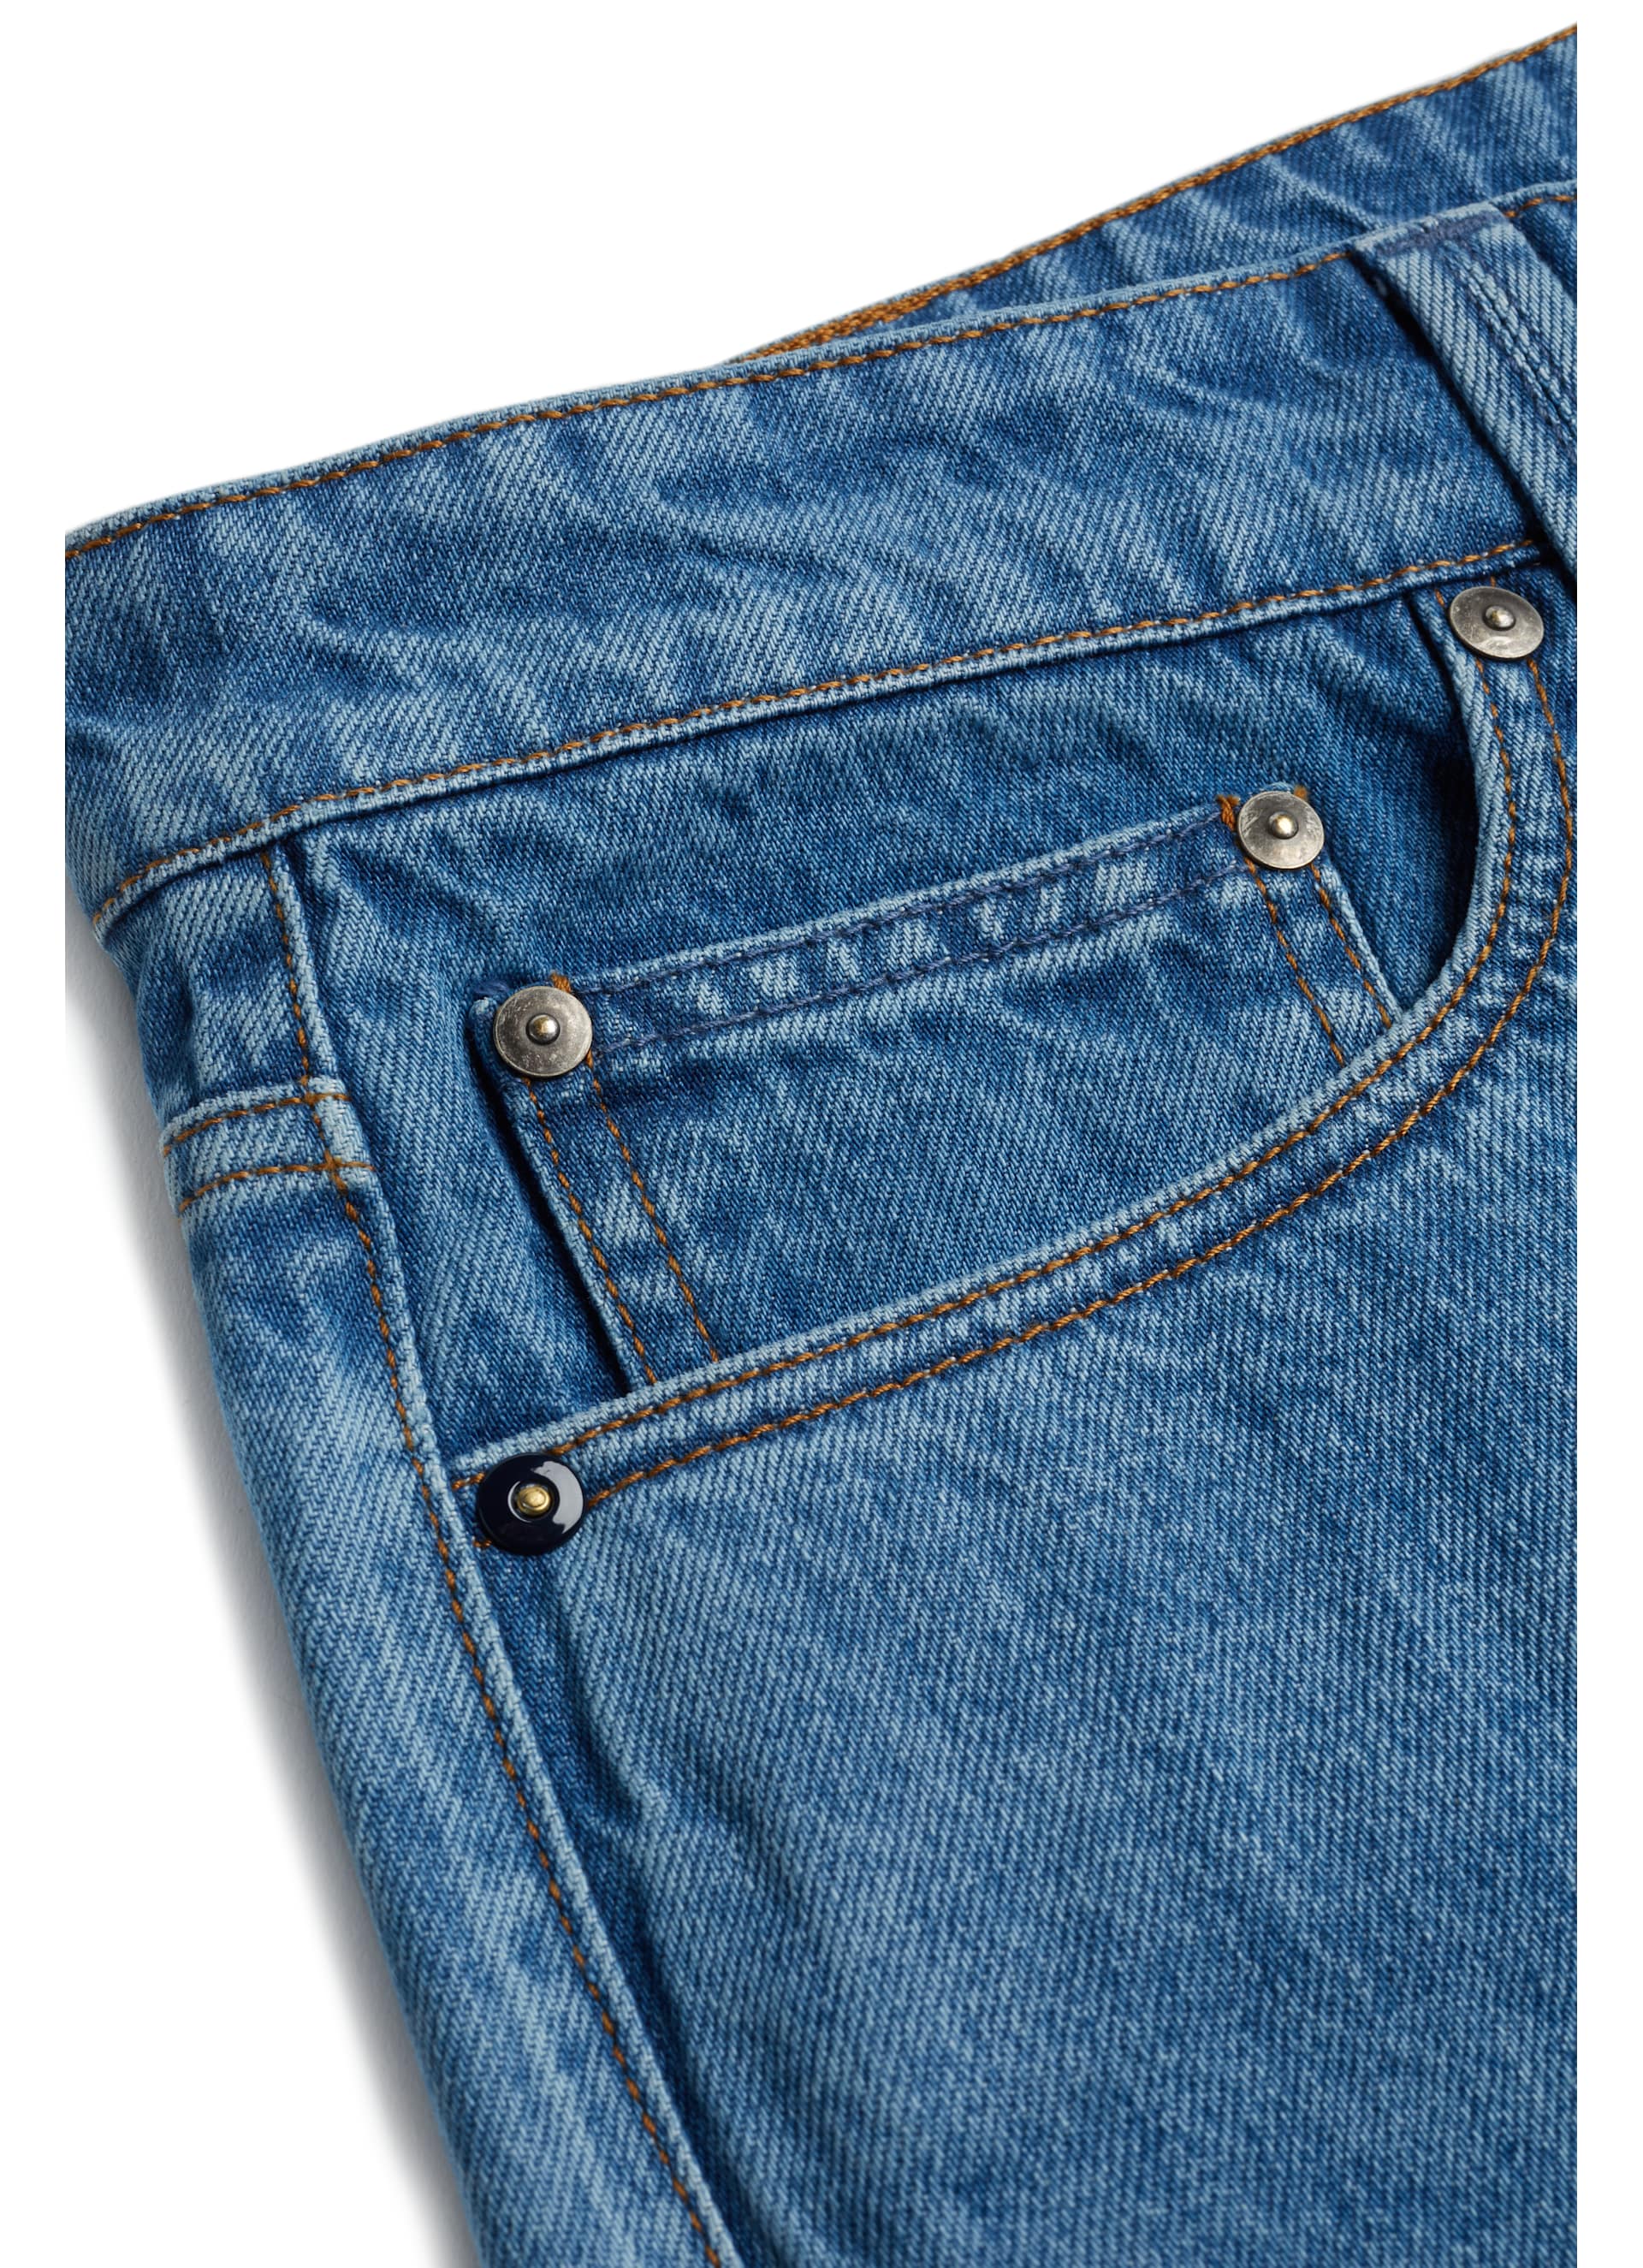 Light Blue Selvedge Jeans B744i | Suitsupply Online Store